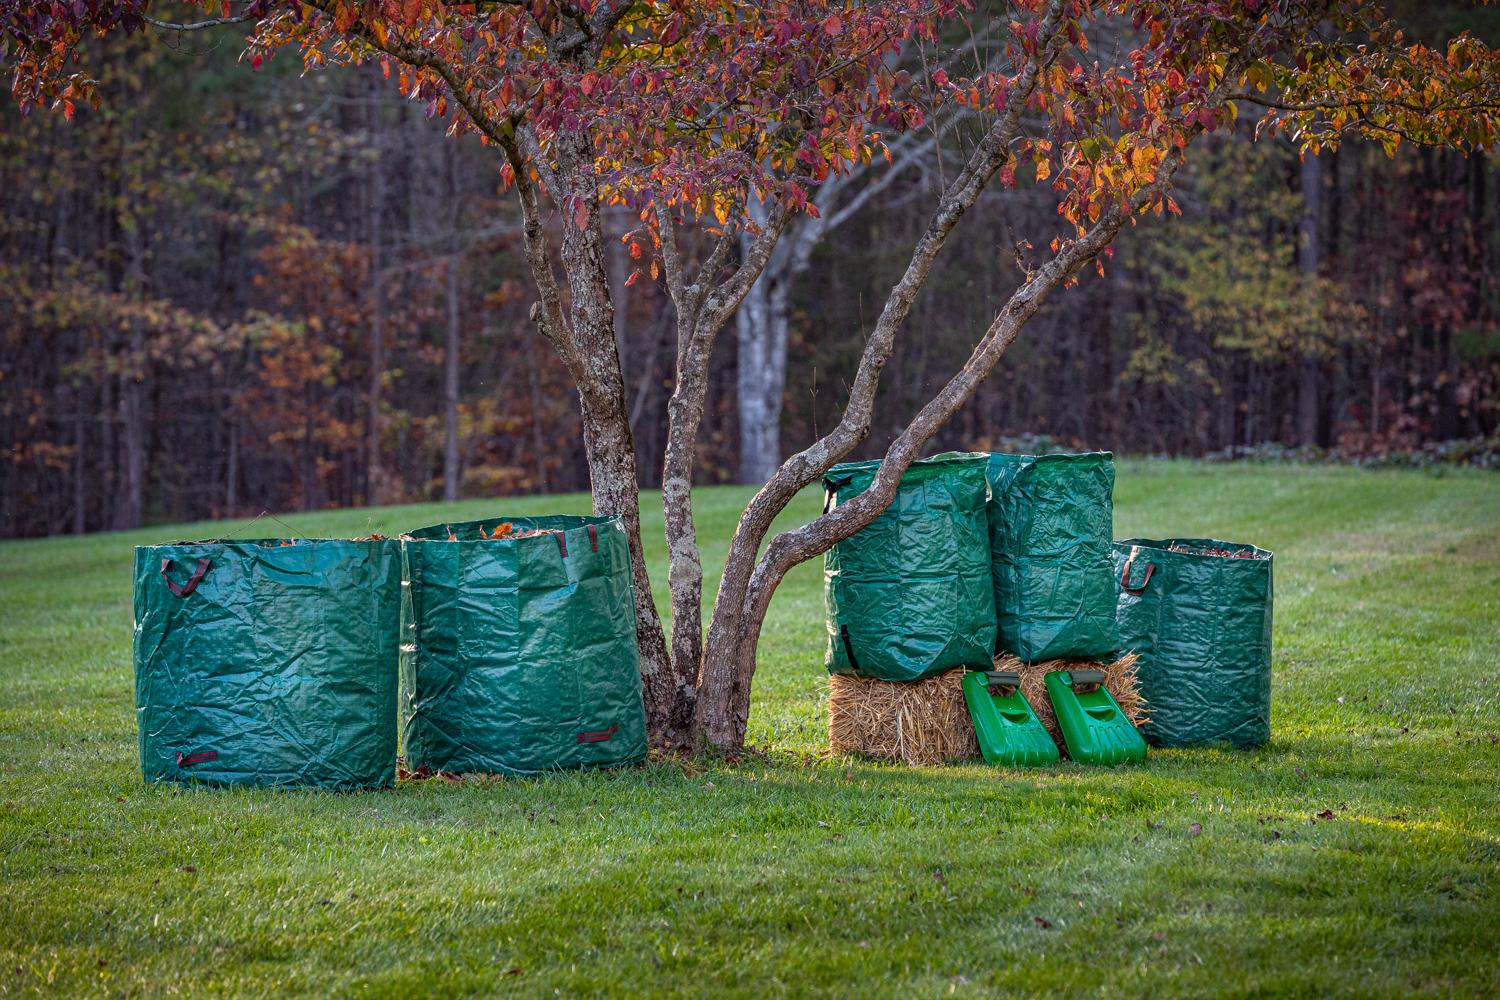 Outdoor Yard Waste Bags Reusable Collapsible Garden Leaf Bag Lawn Bags Tarp  Bag Patio Garden Bag Containers Reusable Trash Bags - AliExpress